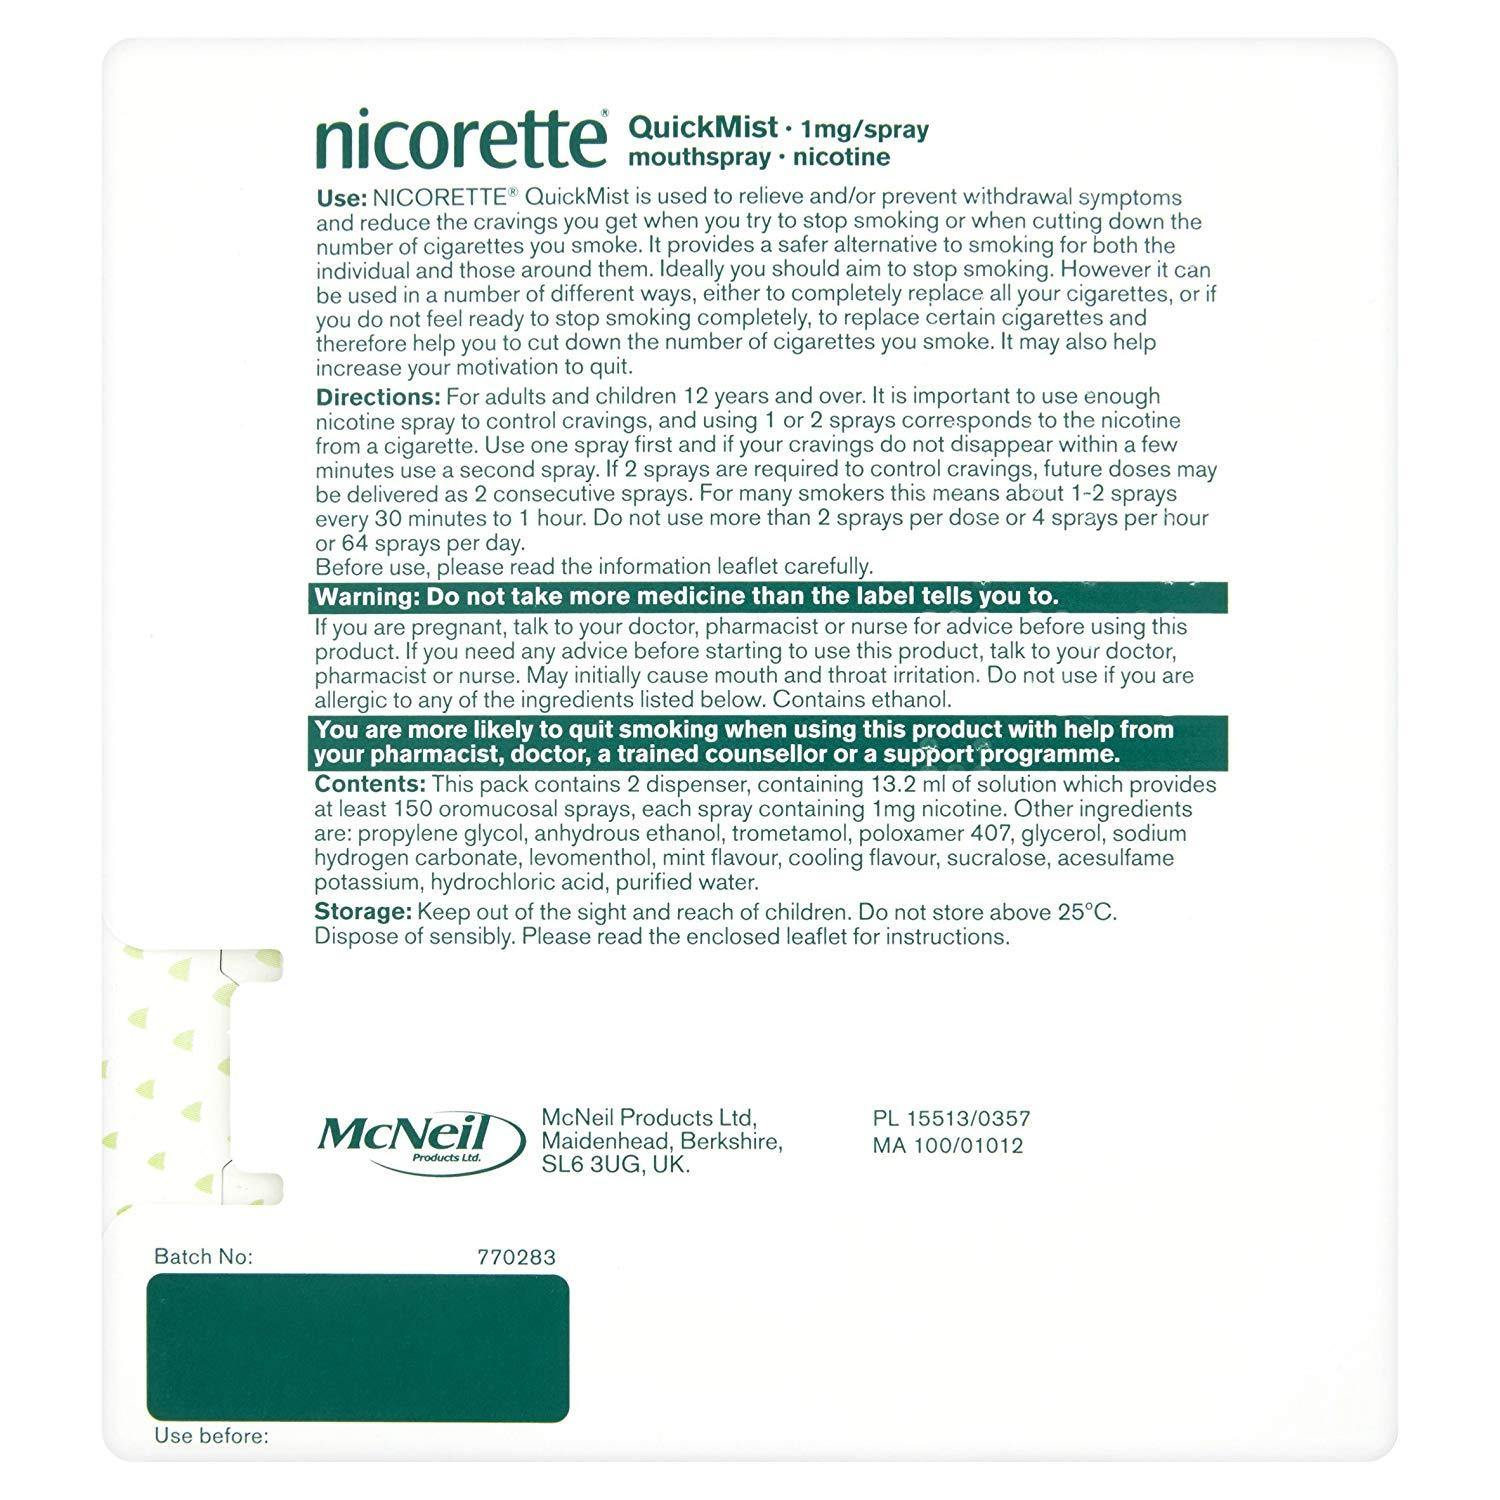 Nicorette QuickMist Mouth Spray Duo Pack (2 x 150 Sprays) - Fresh Mint - Medipharm Online - Cheap Online Pharmacy Dublin Ireland Europe Best Price